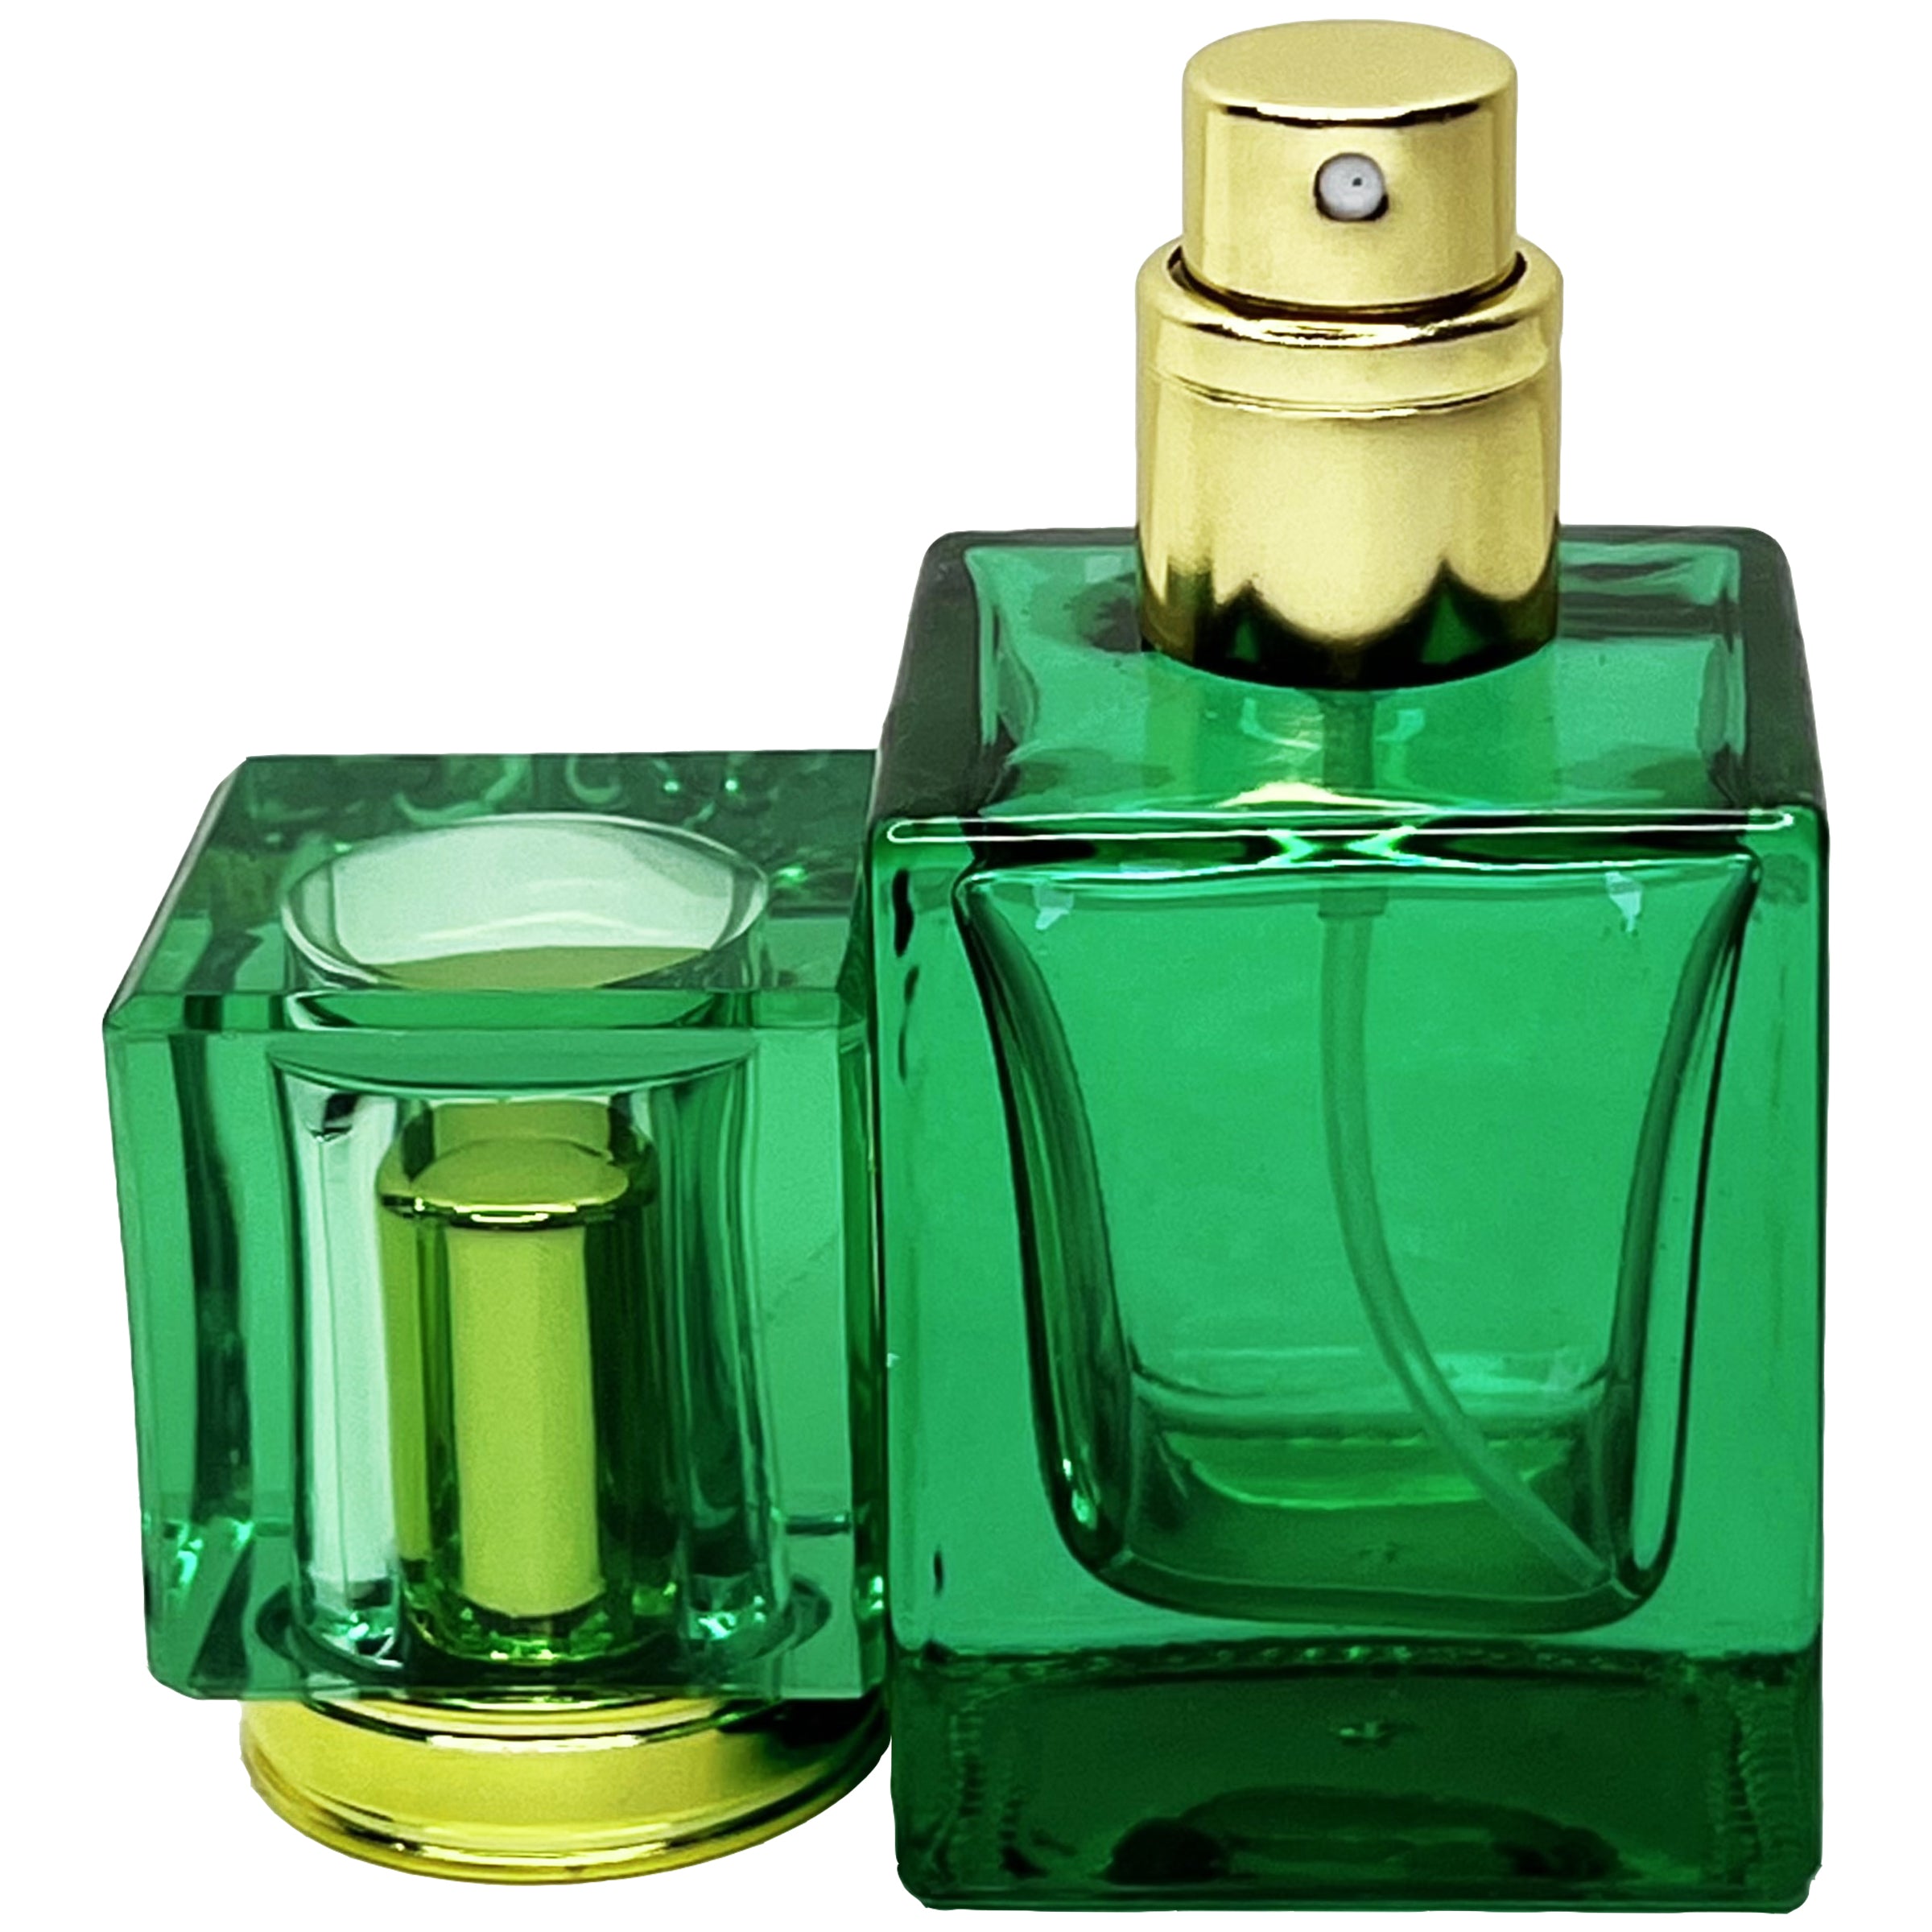 30ml 1oz colored glass cube perfume spray bottles